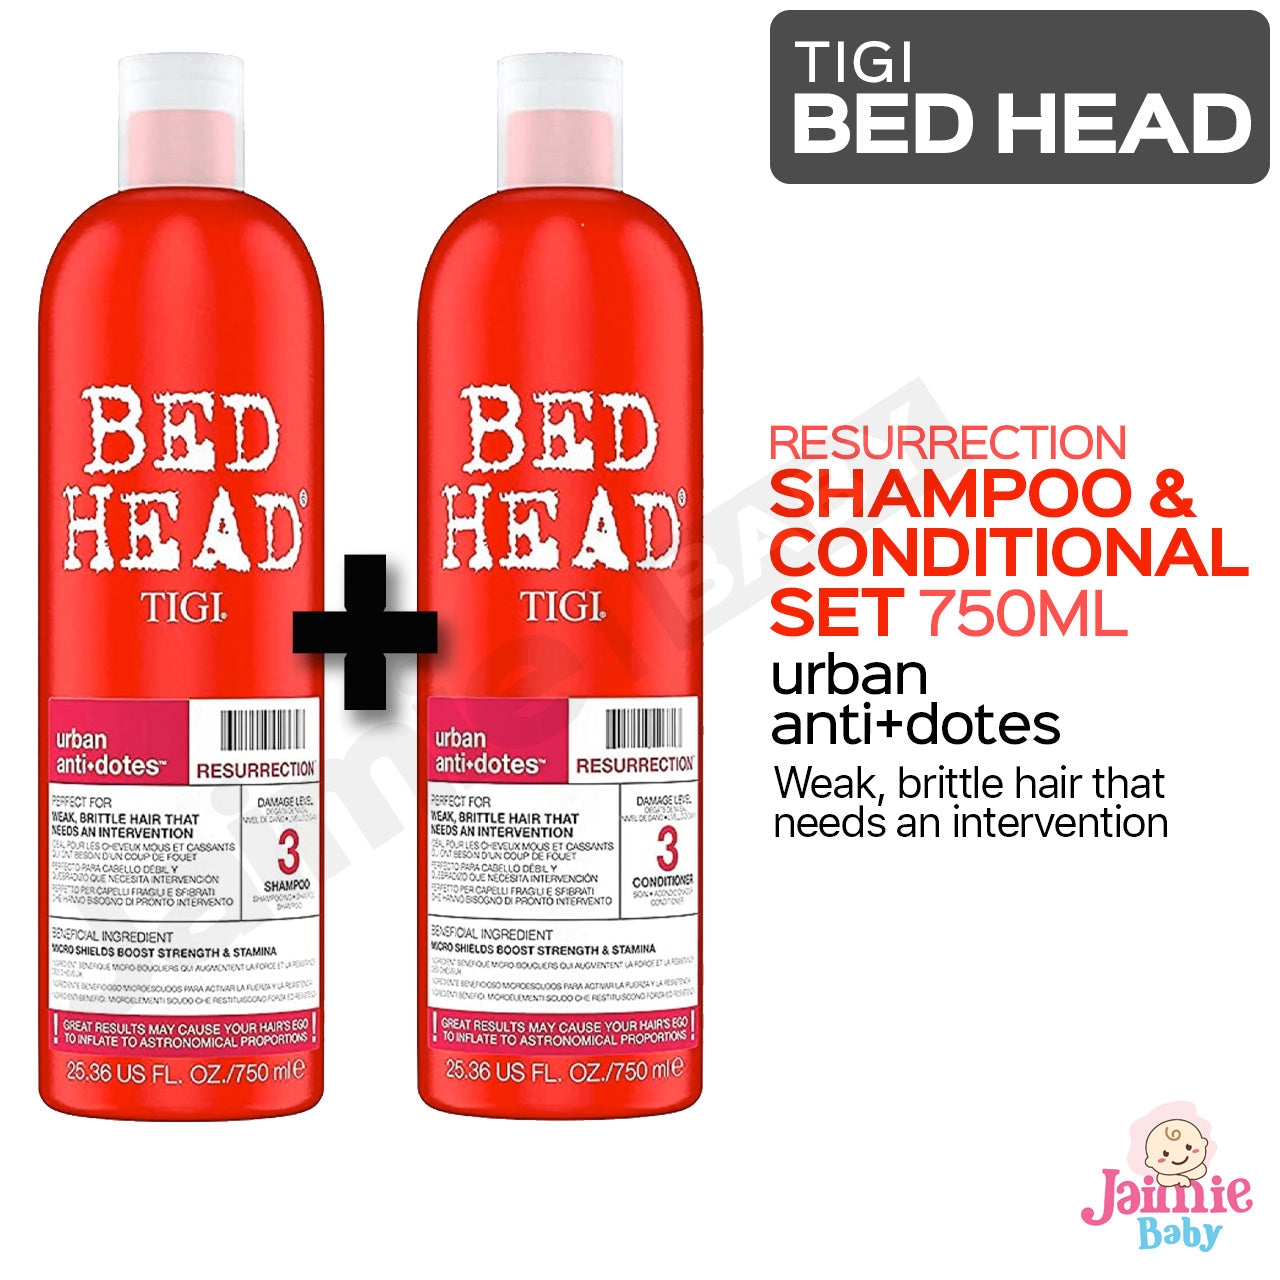 TIGI Bed Head Resurrection Shampoo Conditional Set 750ml for damaged hair